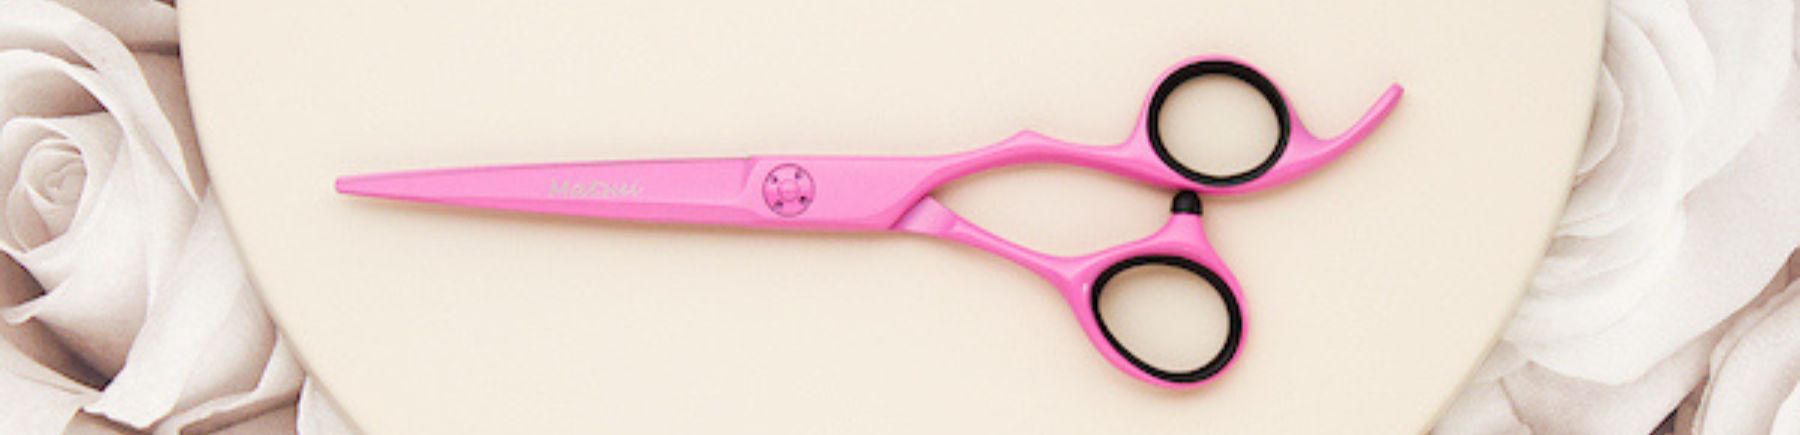 Pink Hair Scissors.